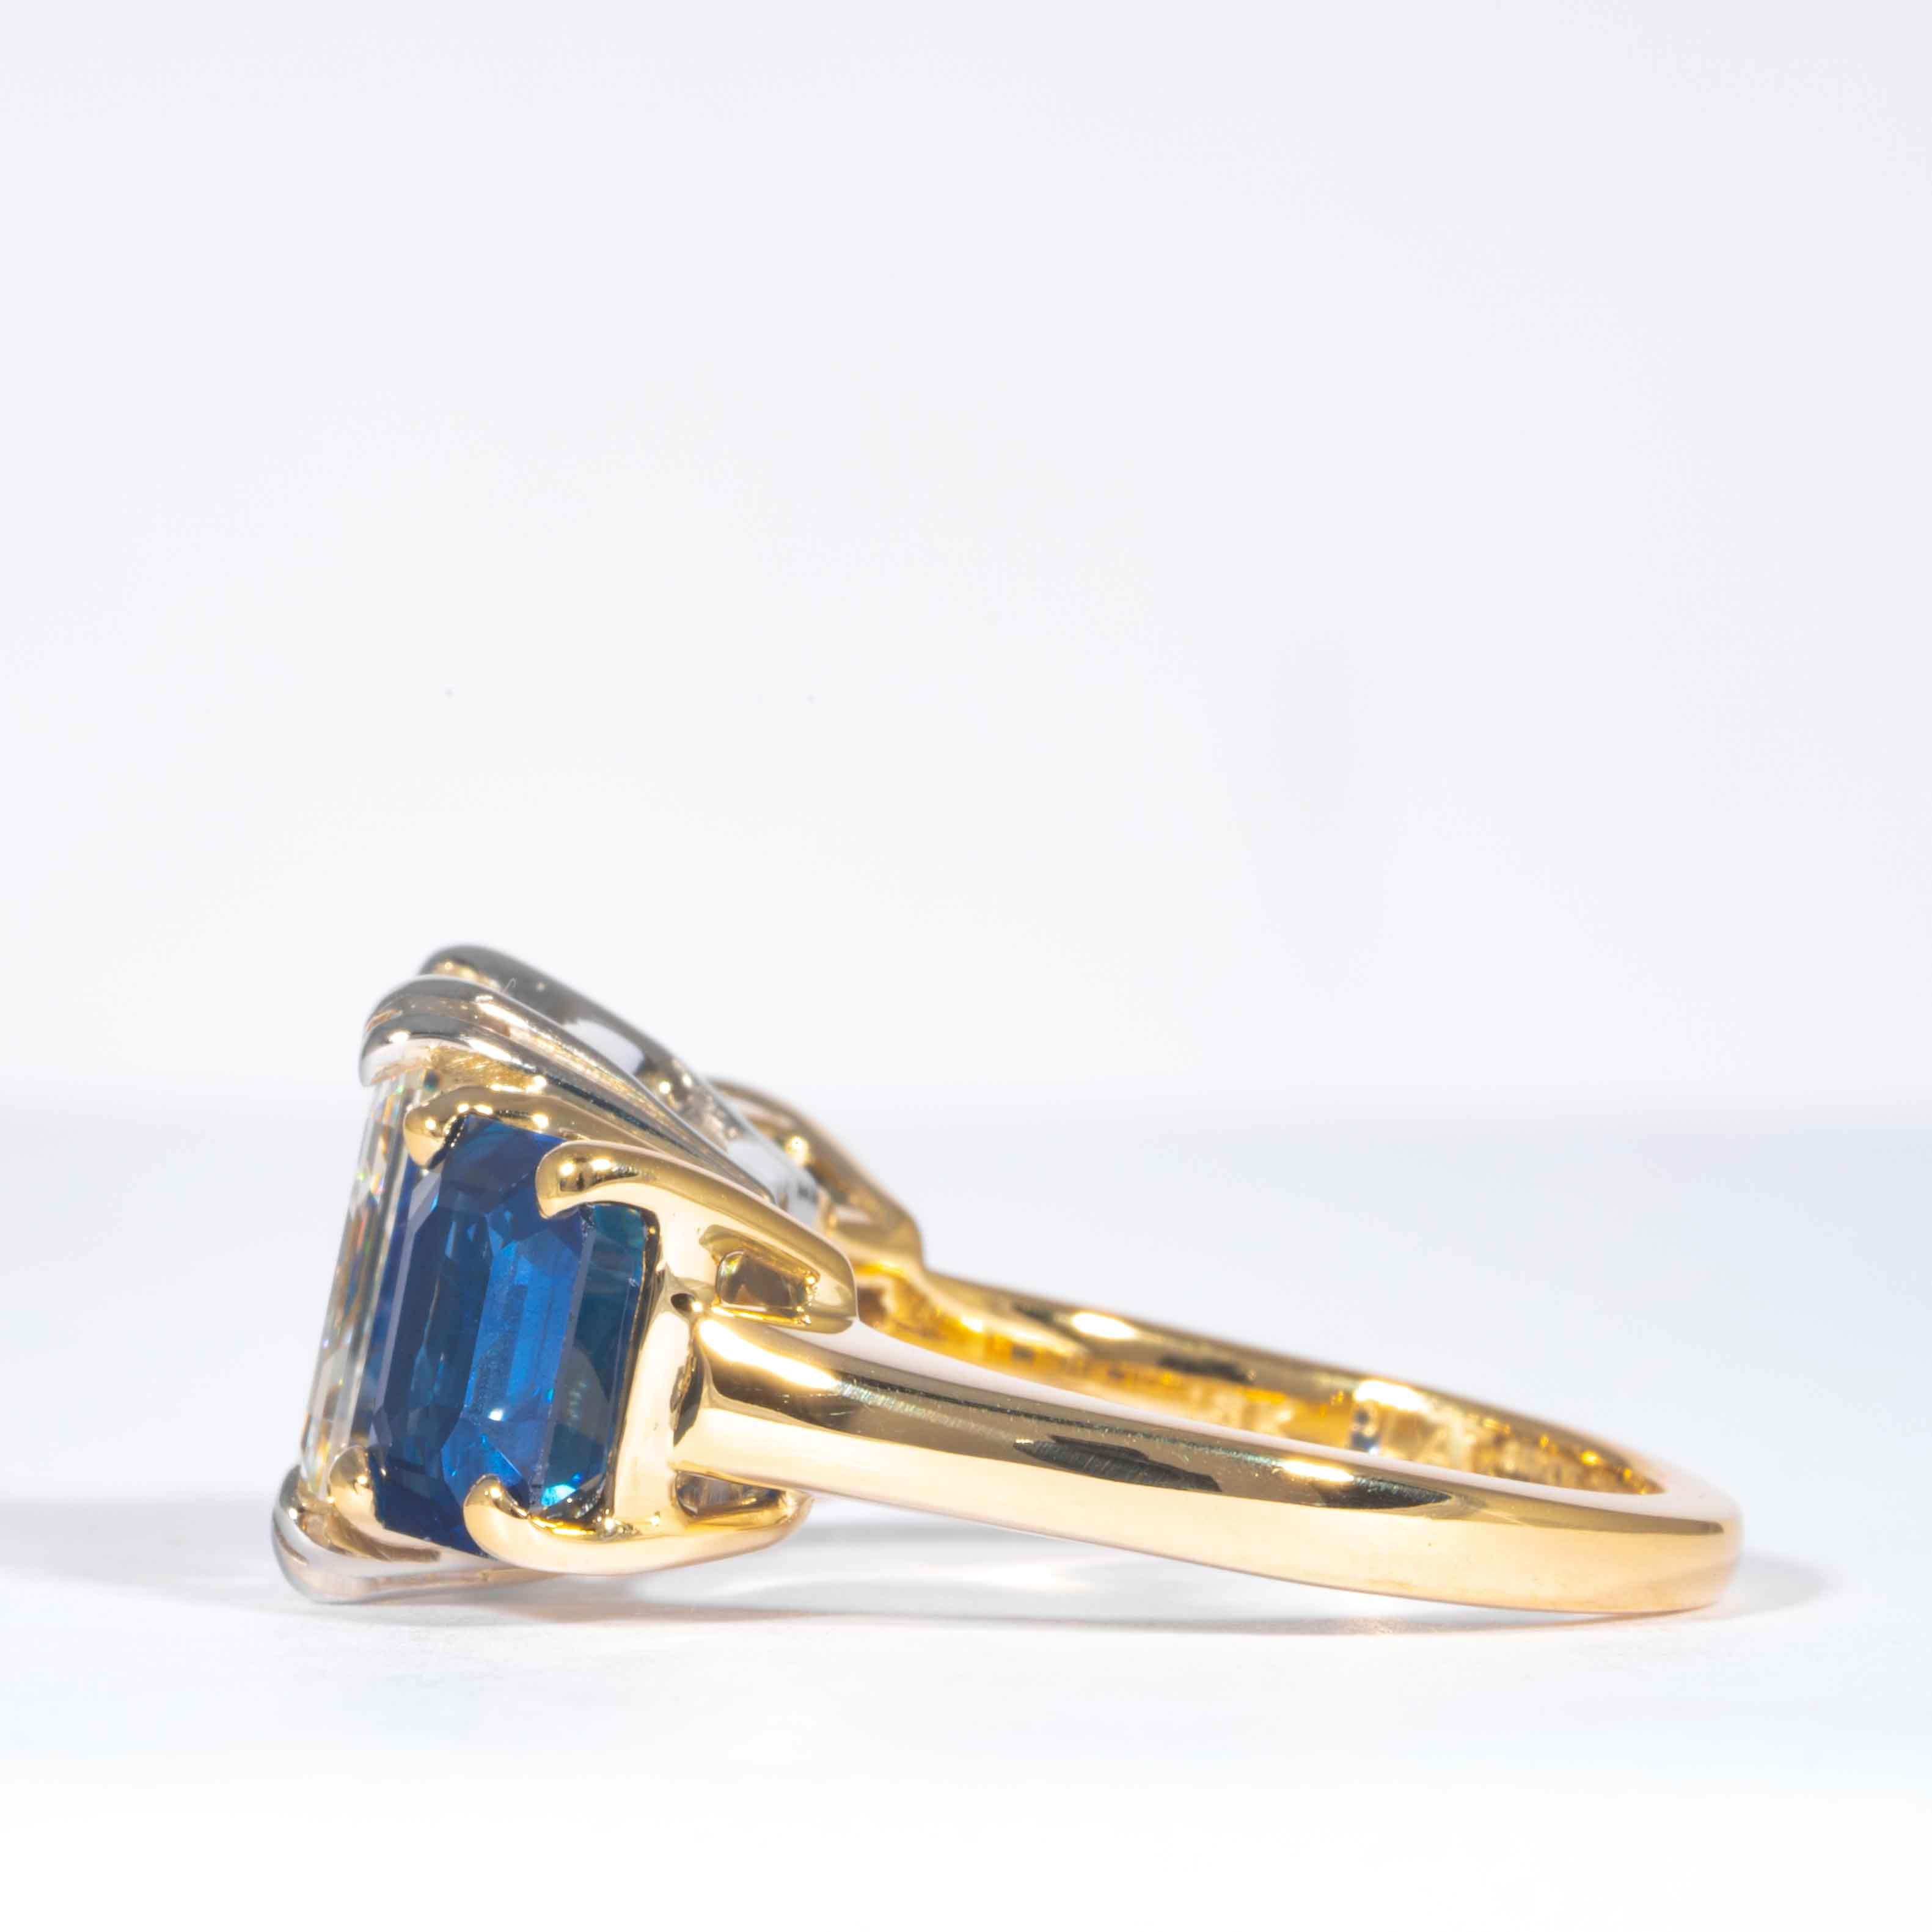 Women's Shreve, Crump & Low GIA Certified 5.01 Carat Square Emerald Cut Diamond Ring